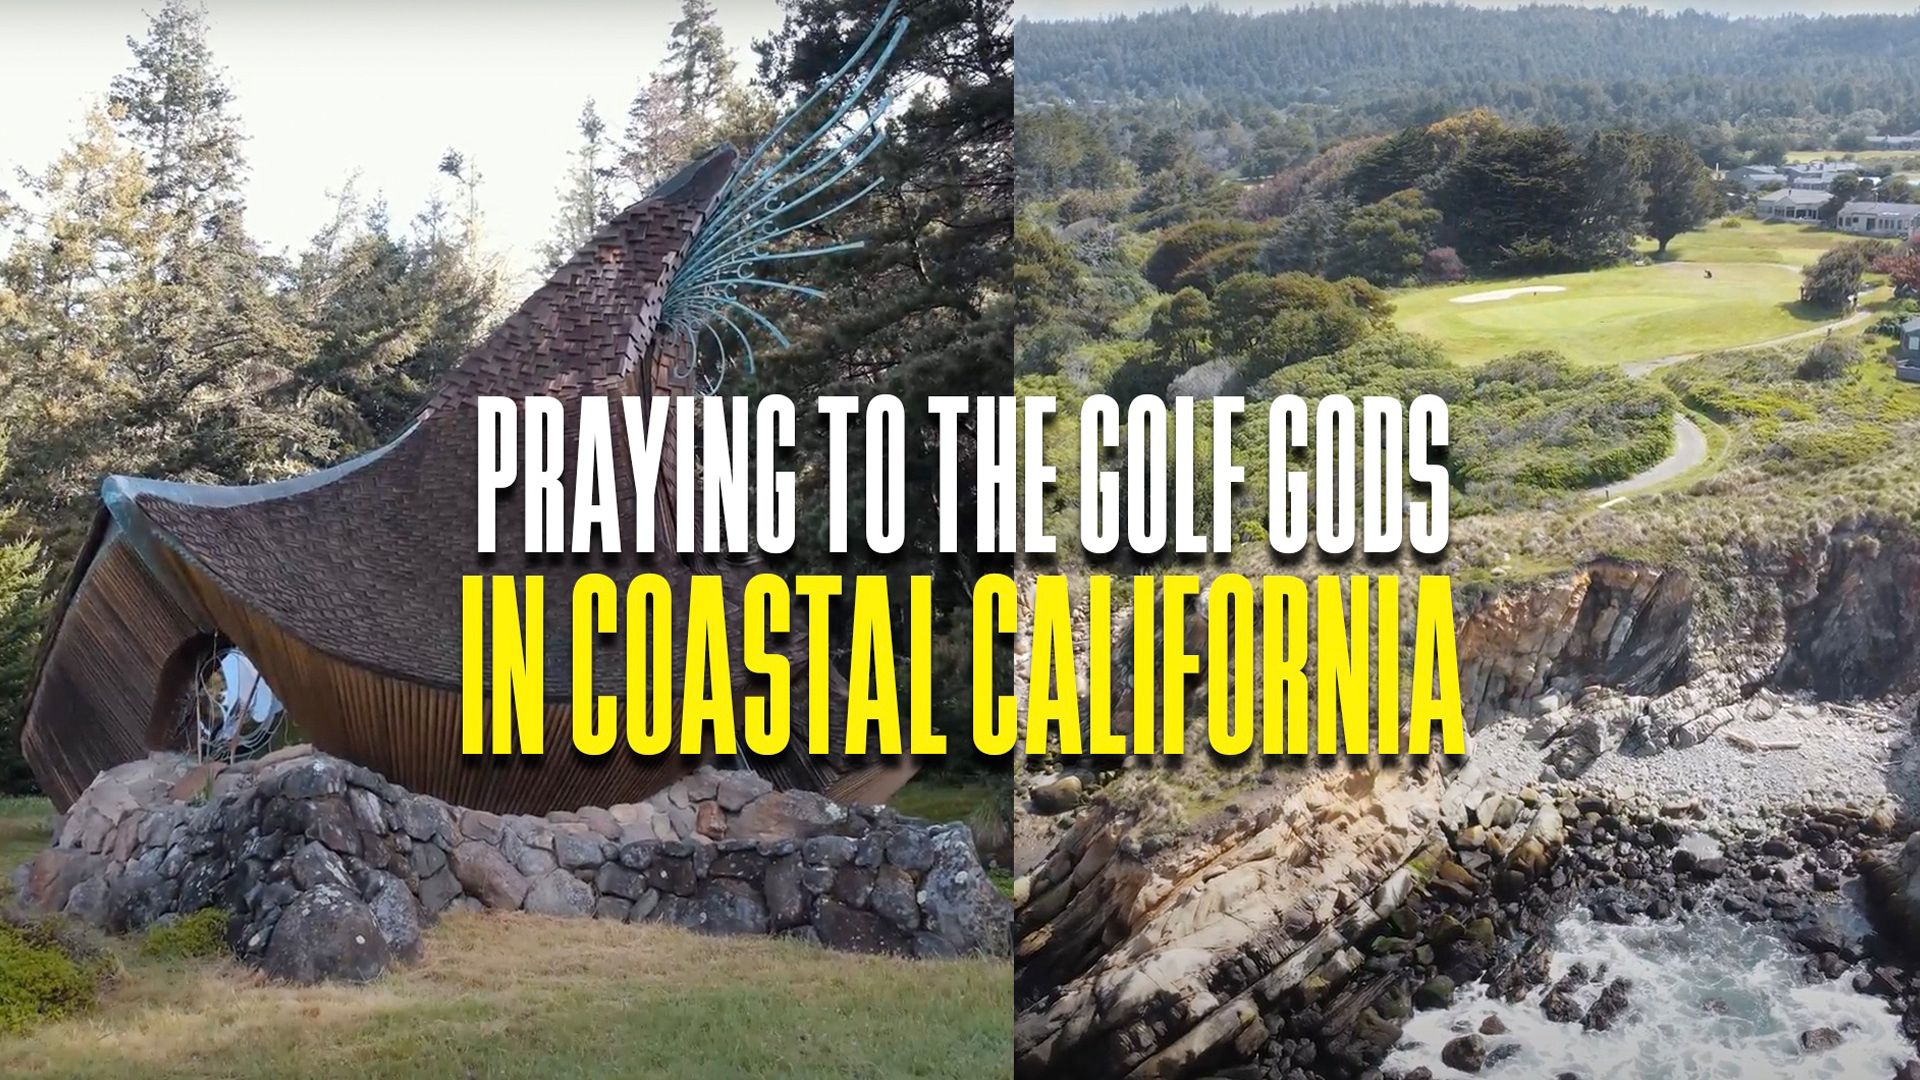 The coastal California course you’ve never heard of